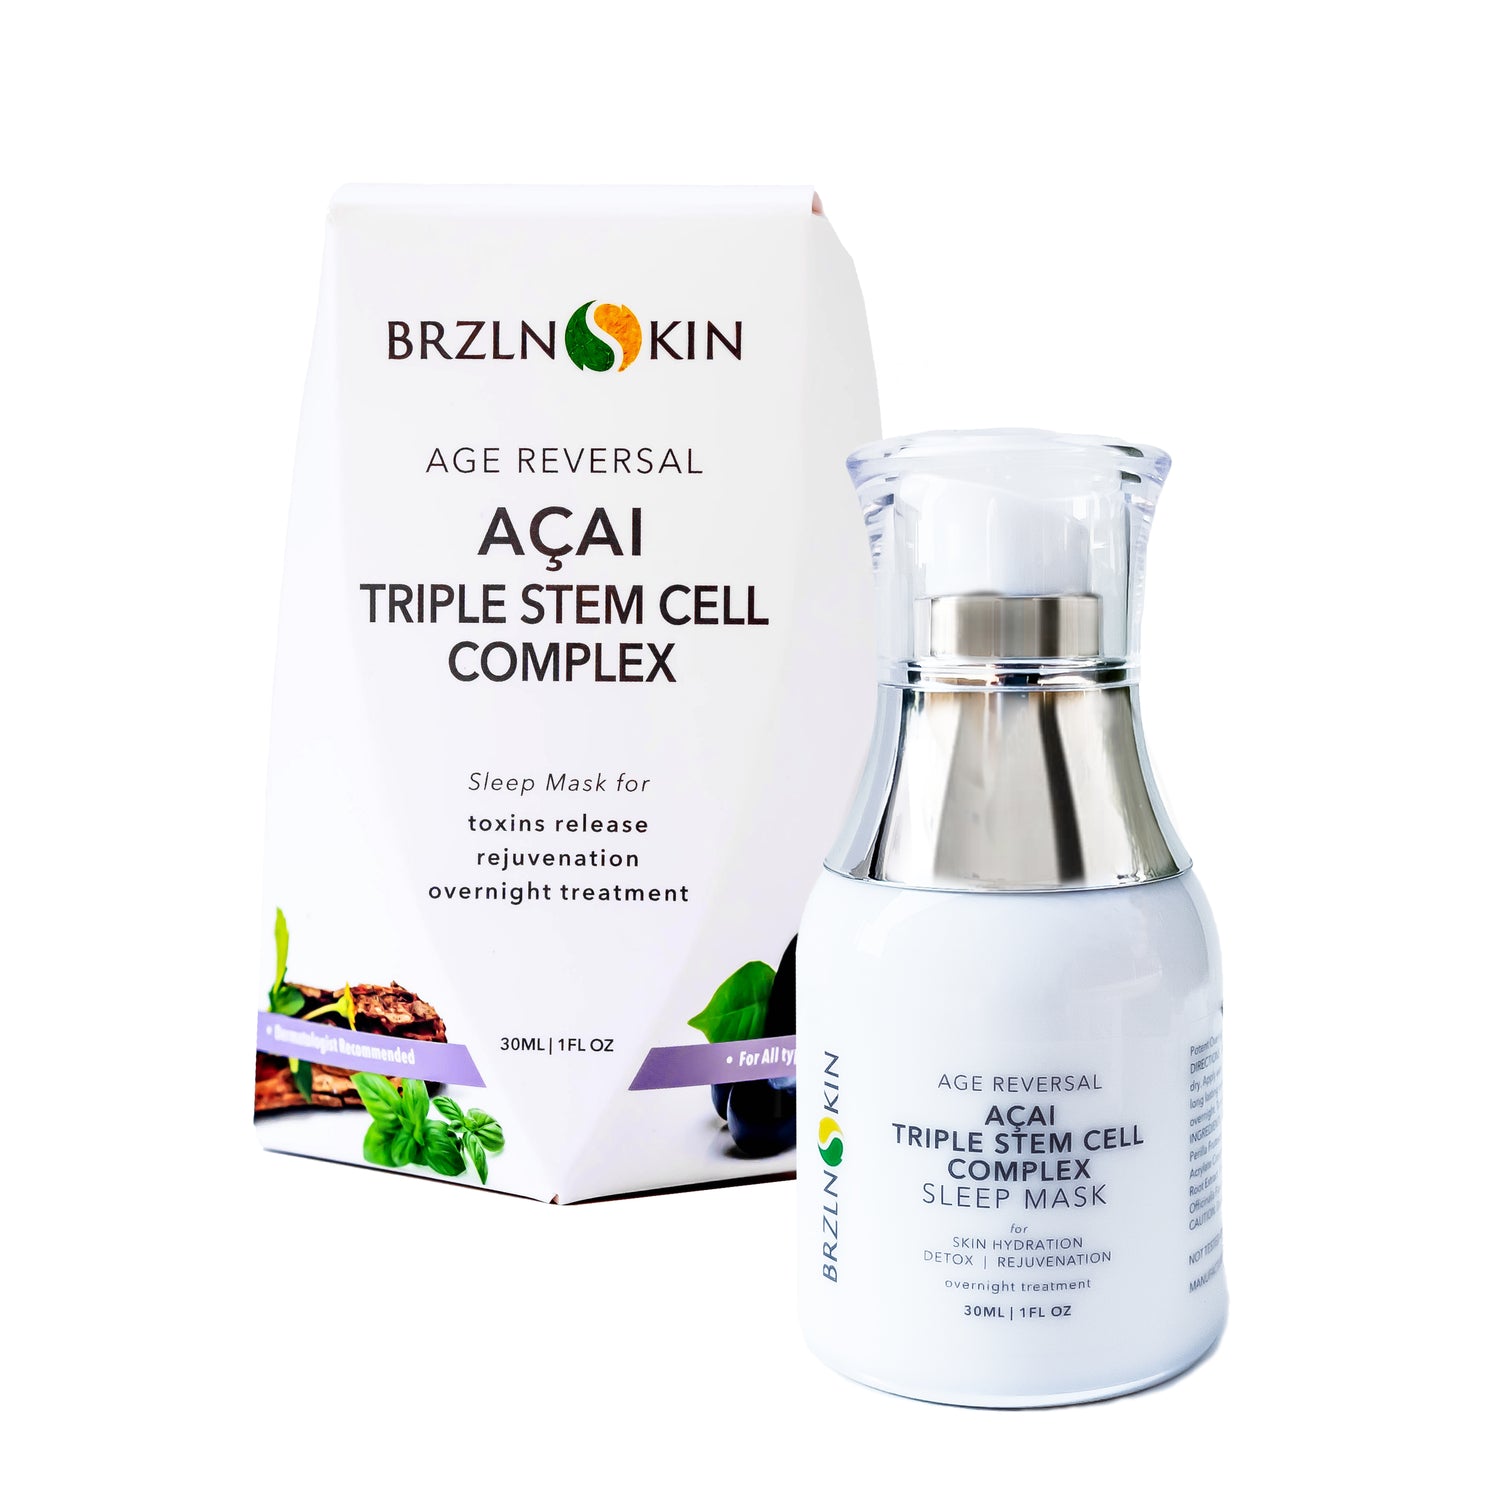 Açai Triple Stem Cell Complex - Light mask and night serum for overnight rejuvenation